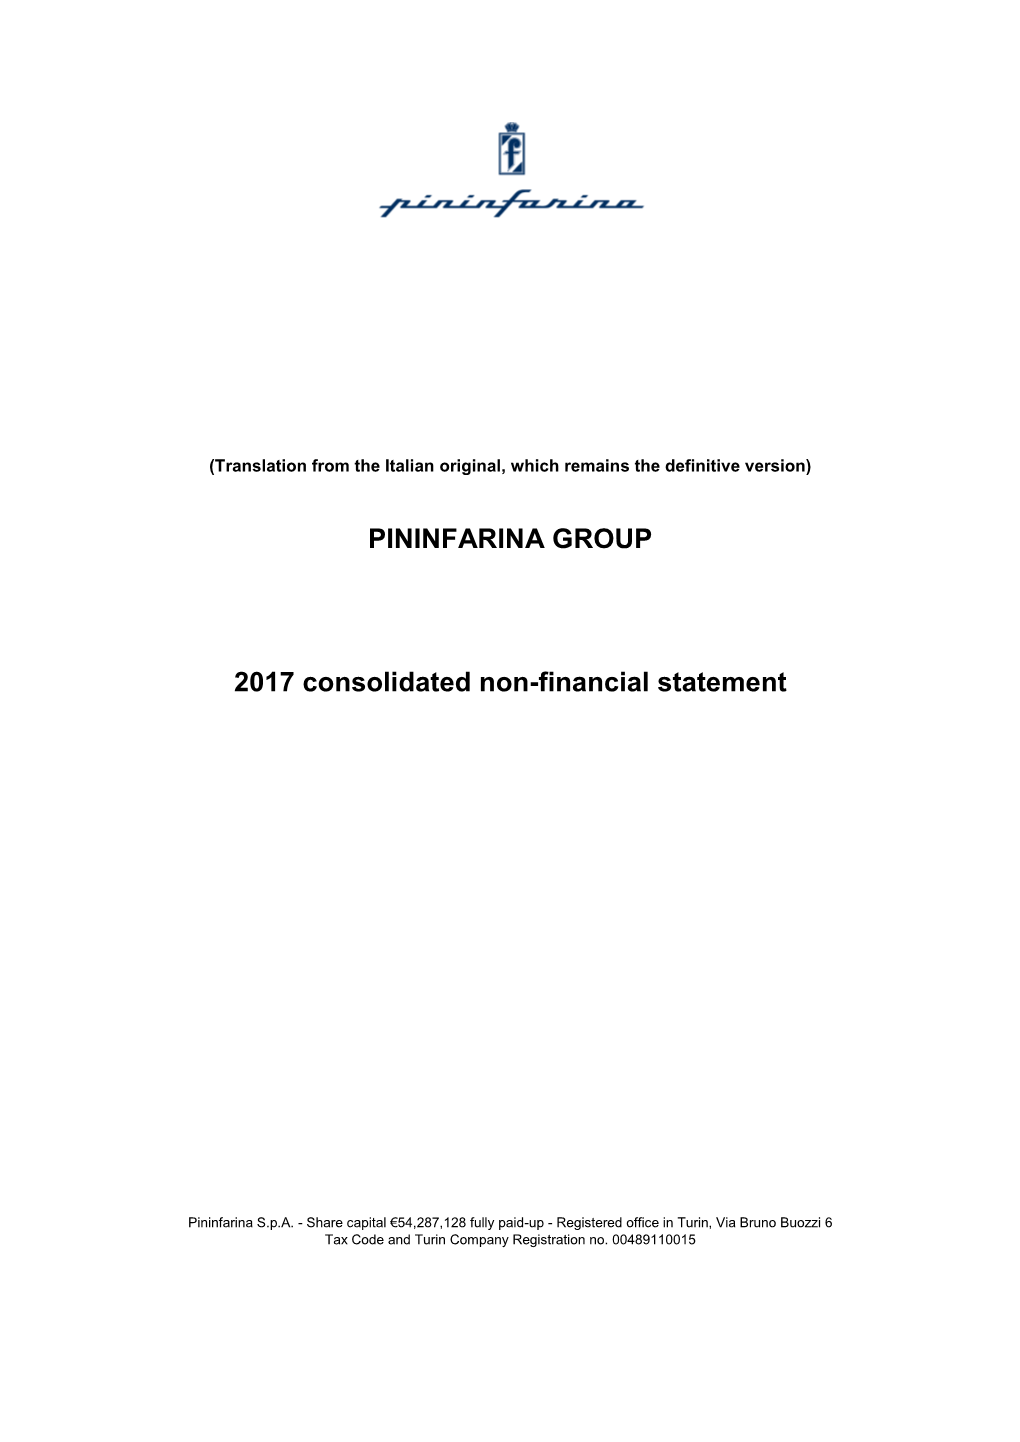 Pininfarina Group 2017 Consolidated Non-Financial Statement